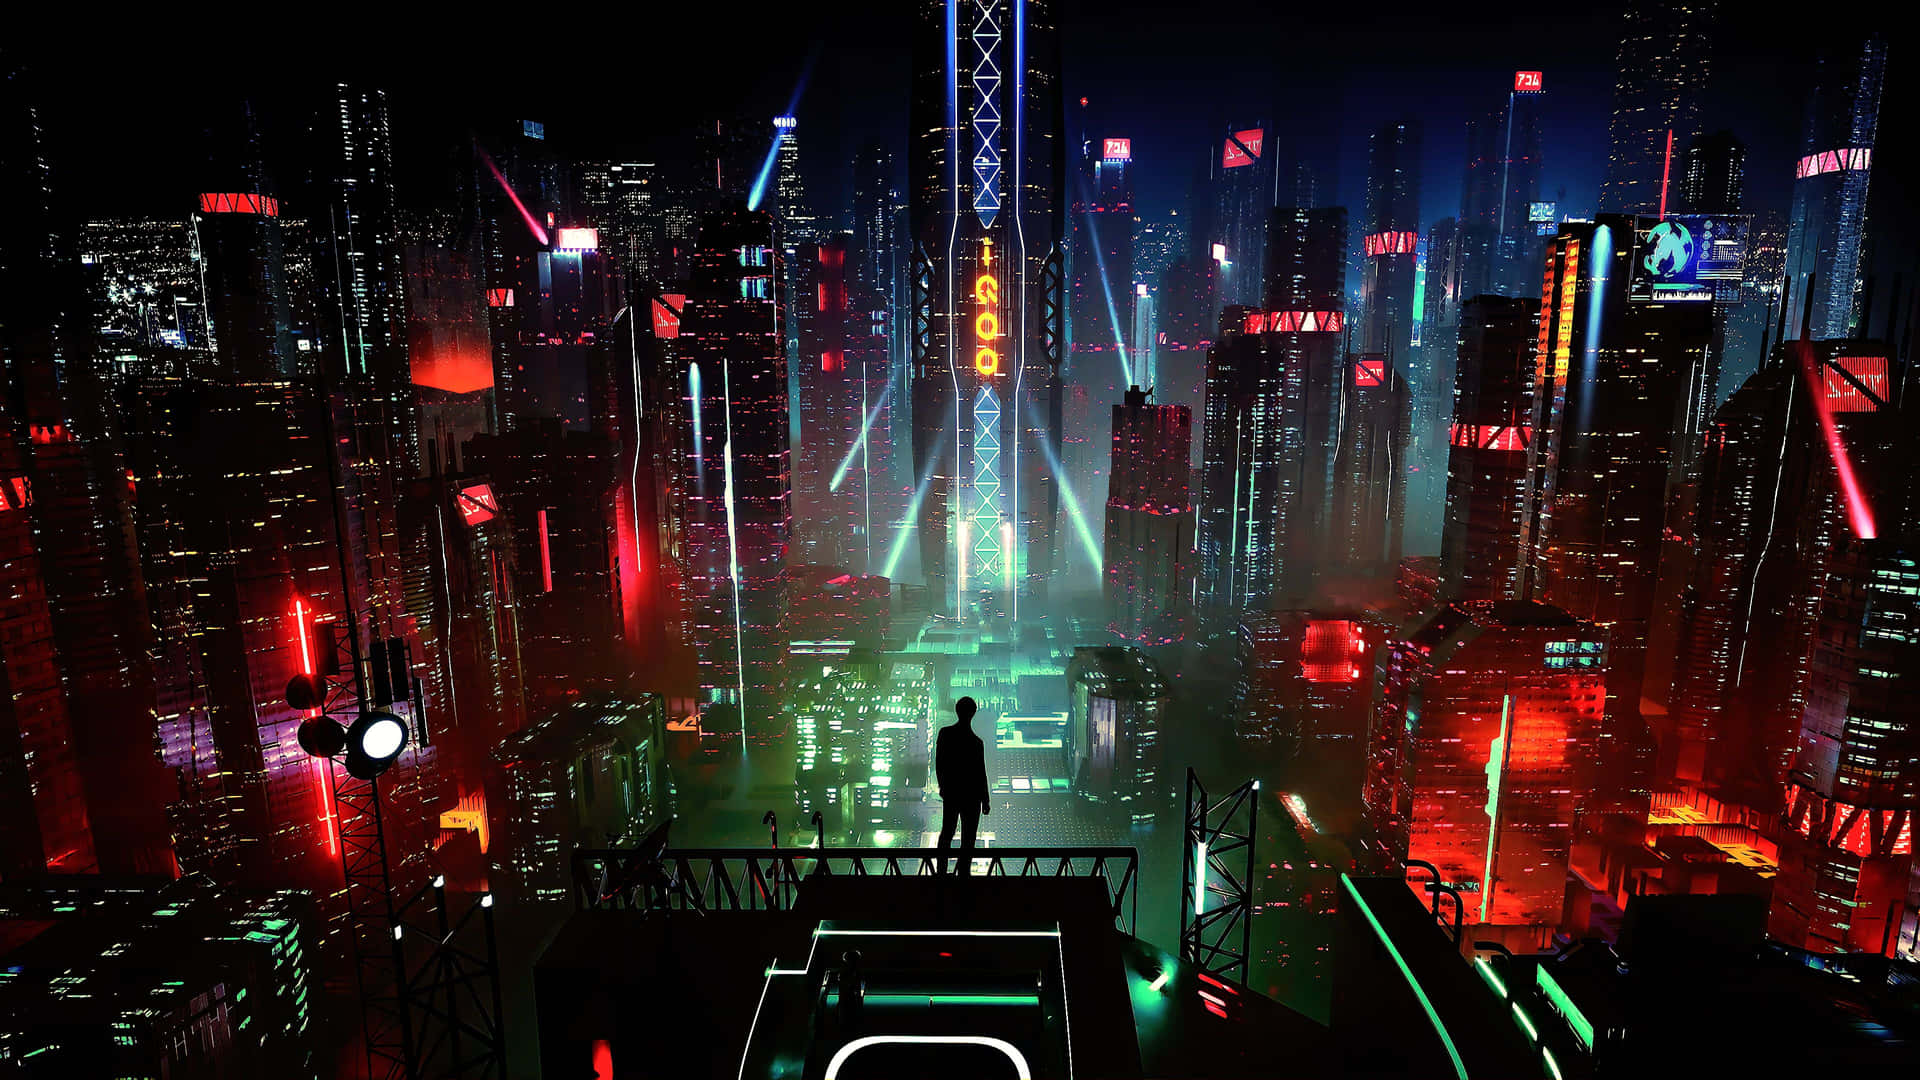 Explore the illuminated city of the future - Cyberpunk City.